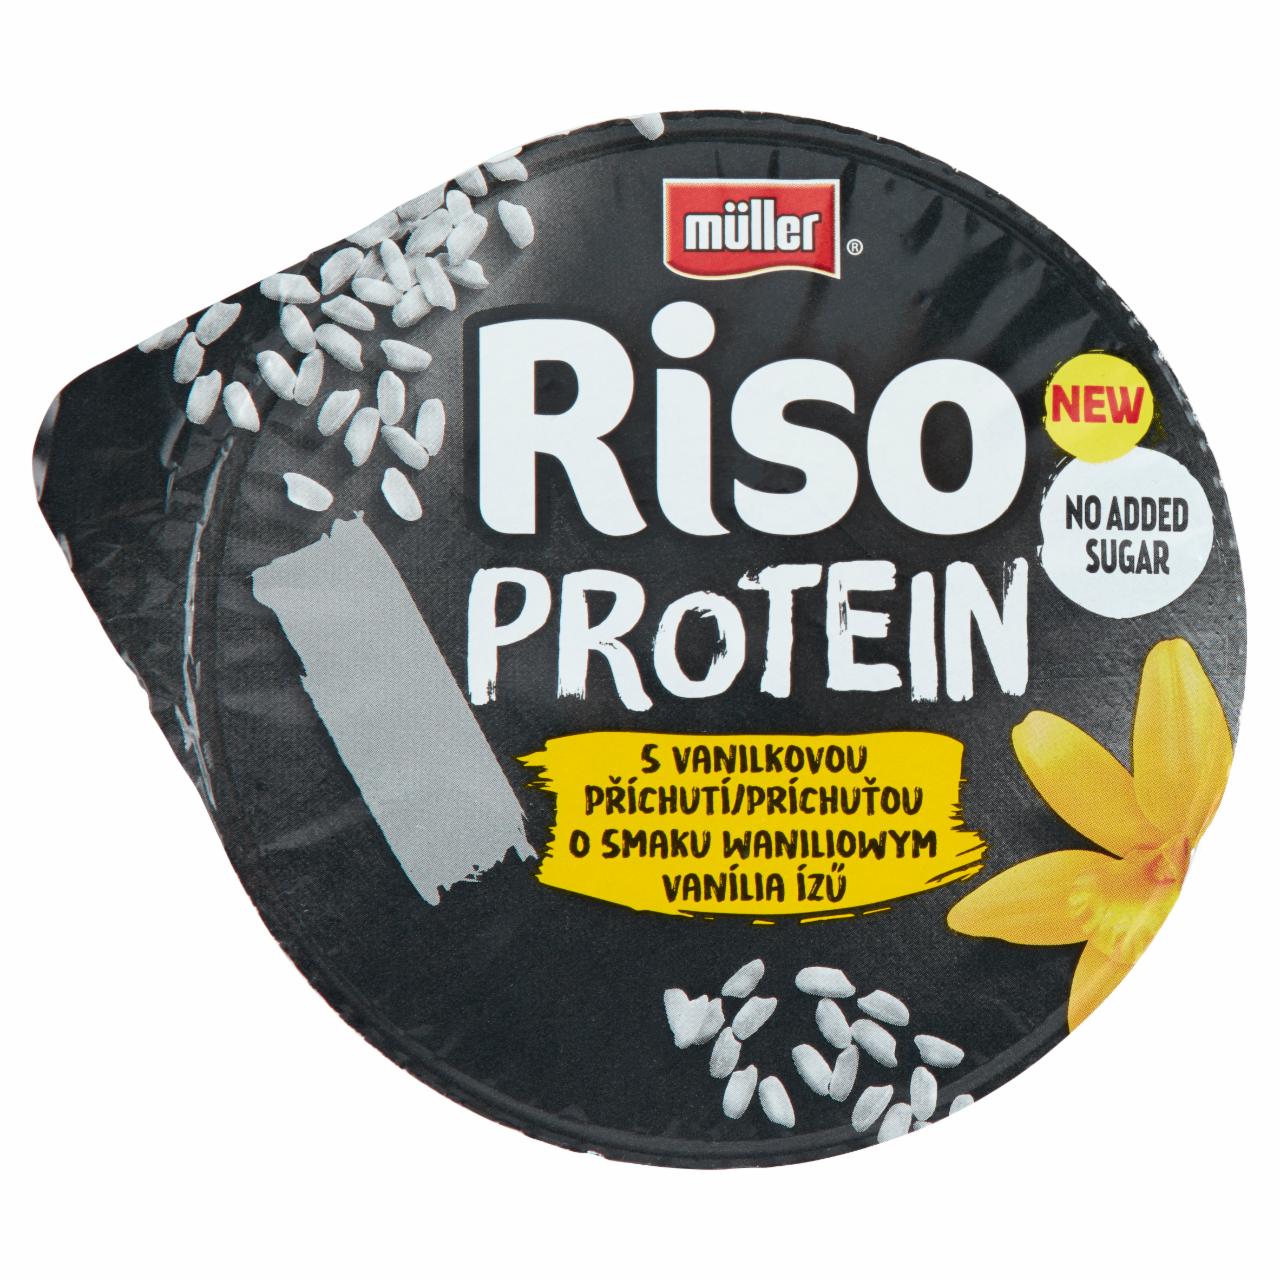 Képek - Riso Protein tejberizs desszert Müller